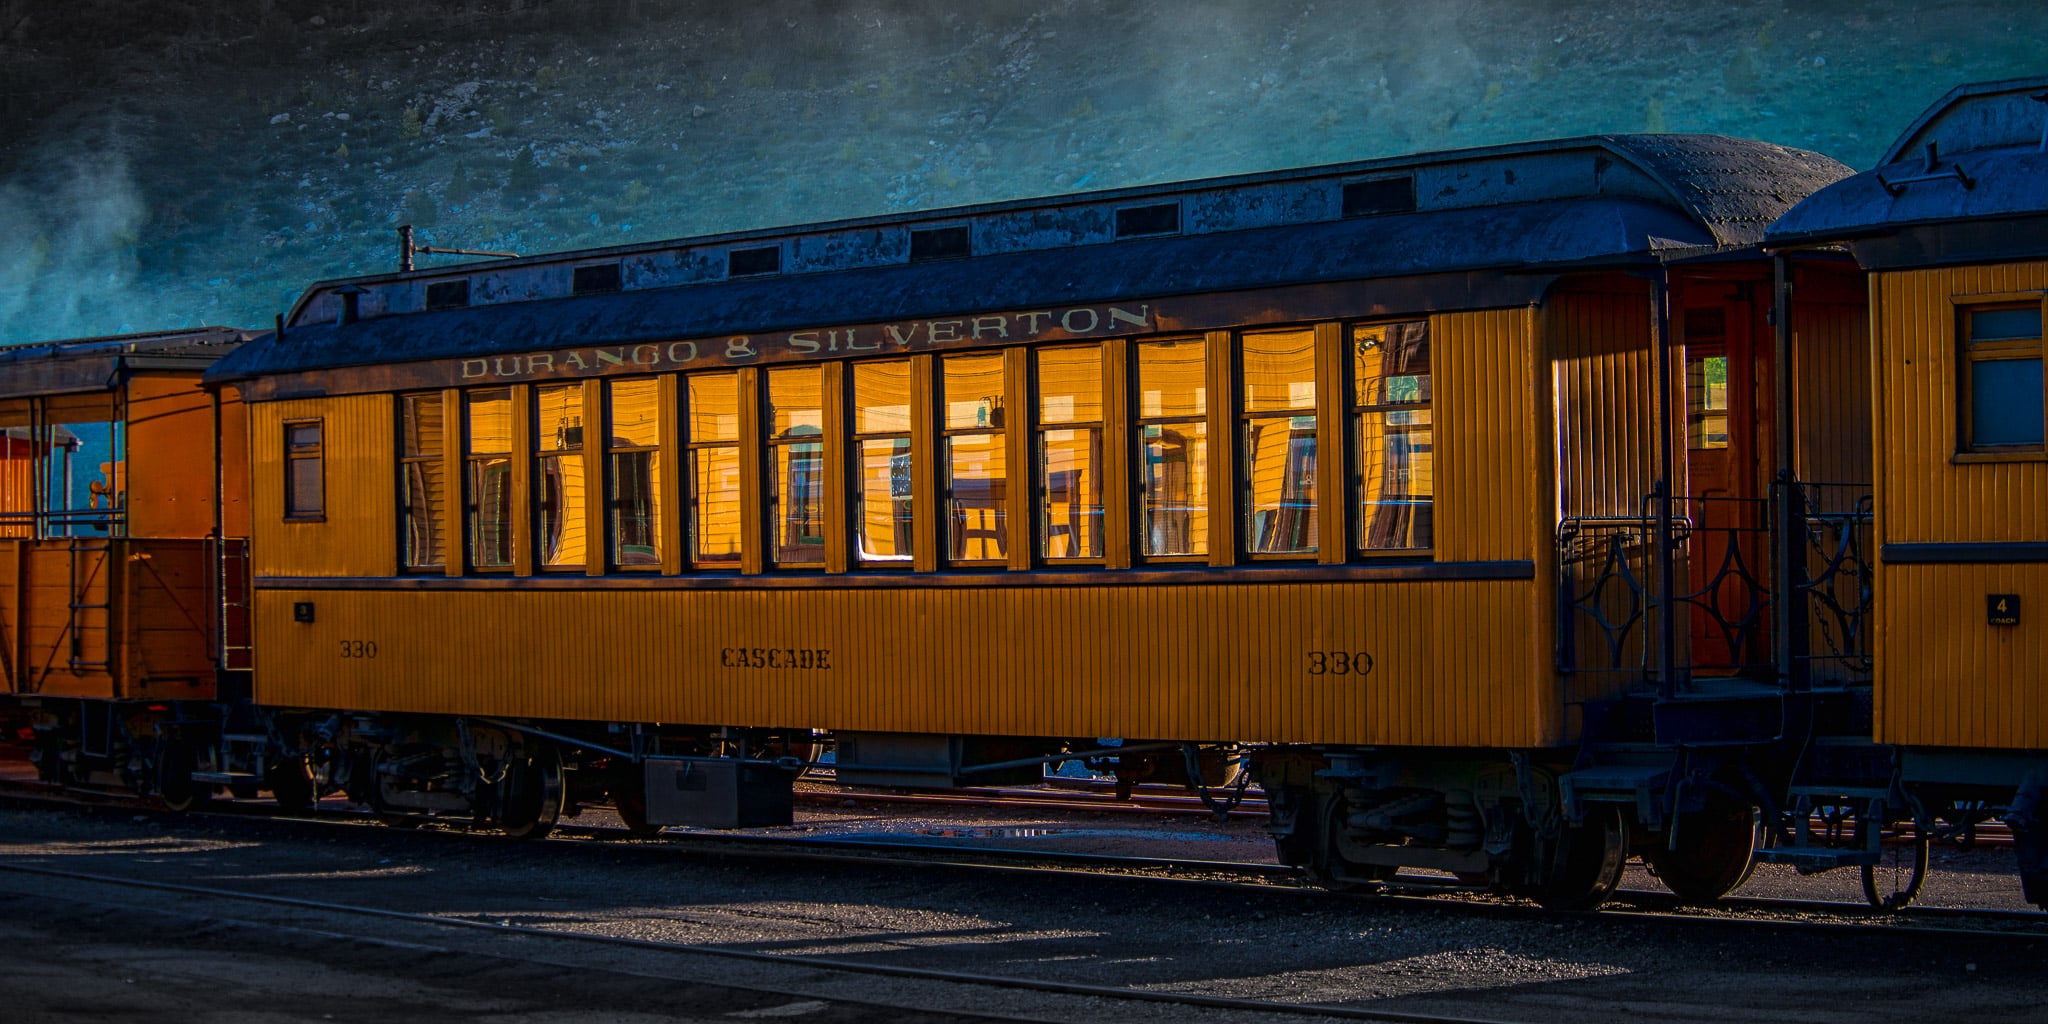 Durango & Silverton Railroad's Cascade passenger car is part of a narrow-gauge train waiting at the Durango, Colorado, station for the next day's trip to Silverton, Colorado.